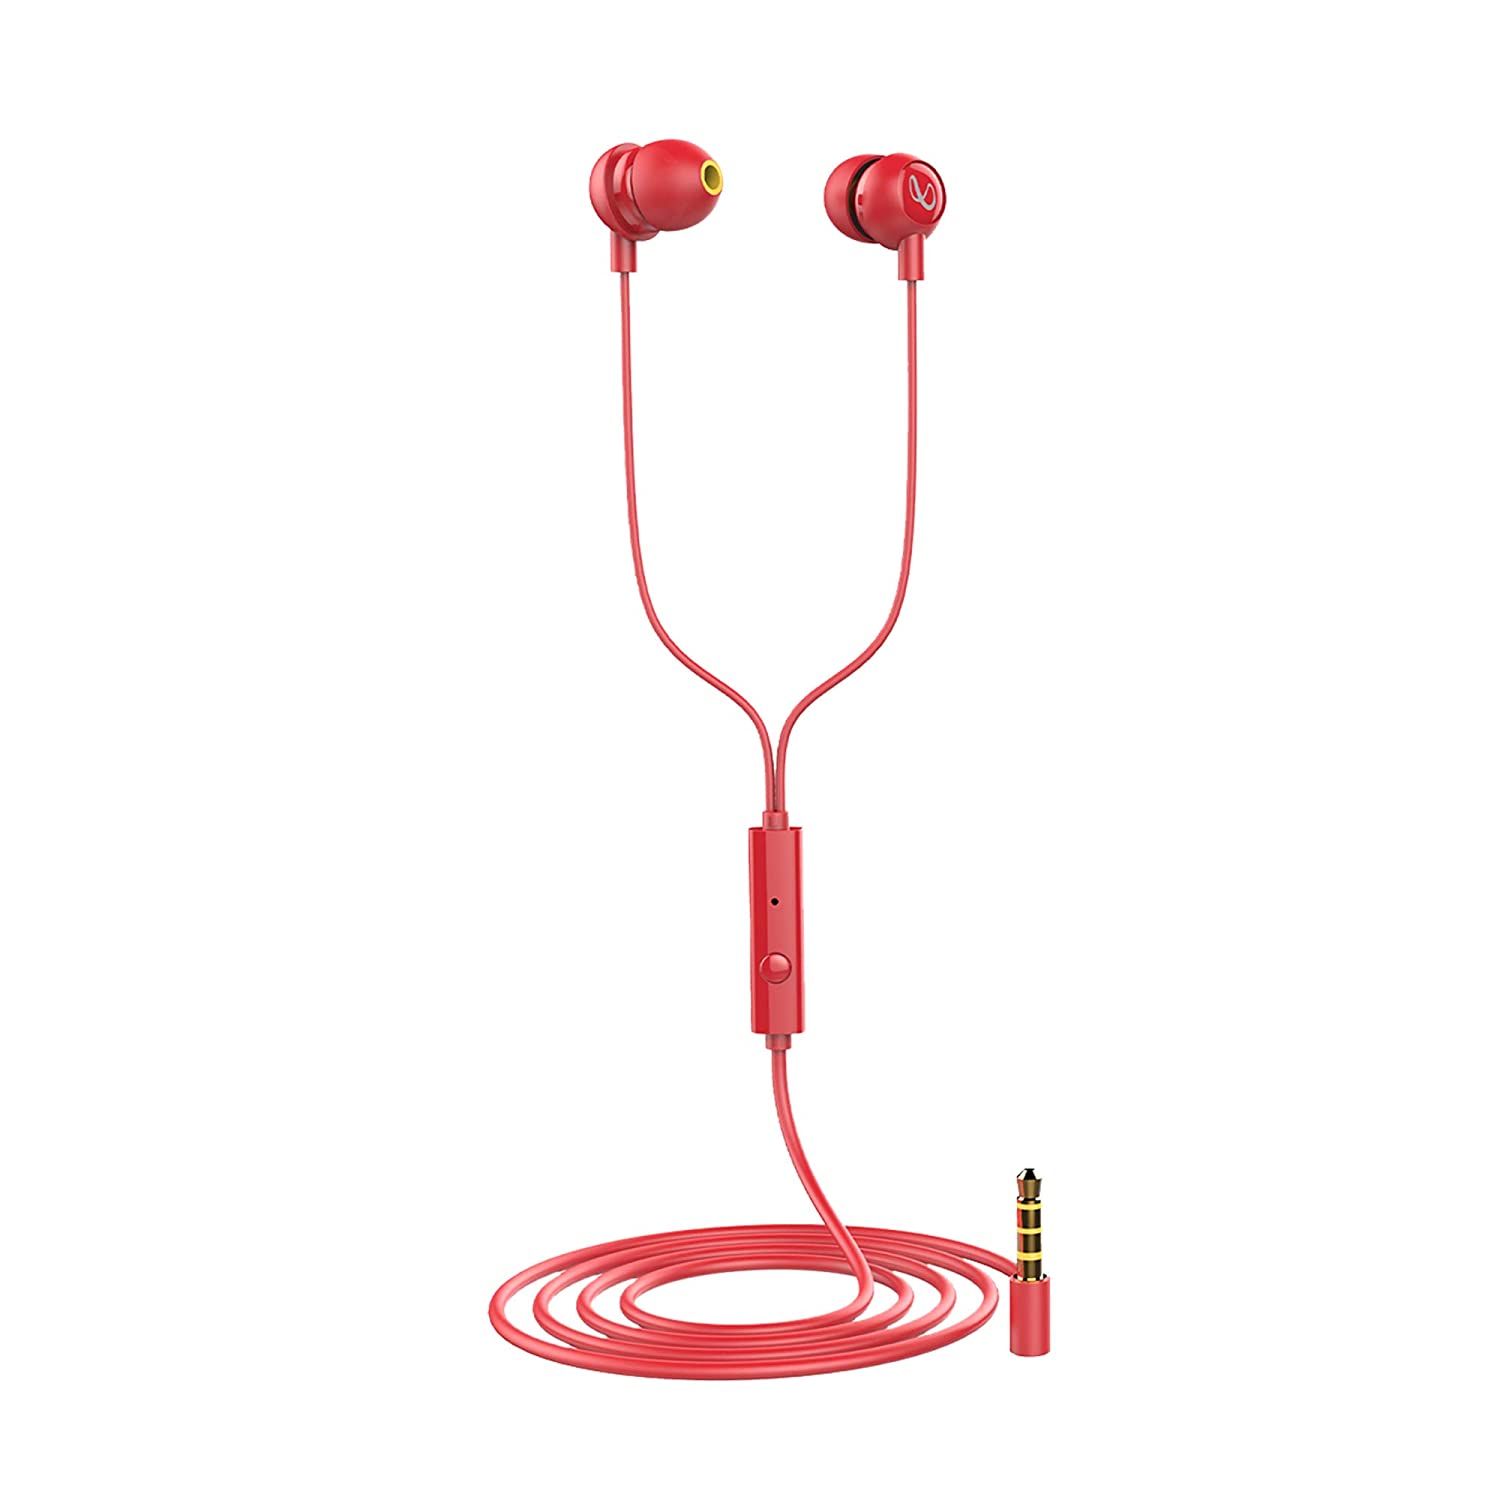 Buy Infinity Zip 20 Wired In Ear Earphones with Mic (Black) Online